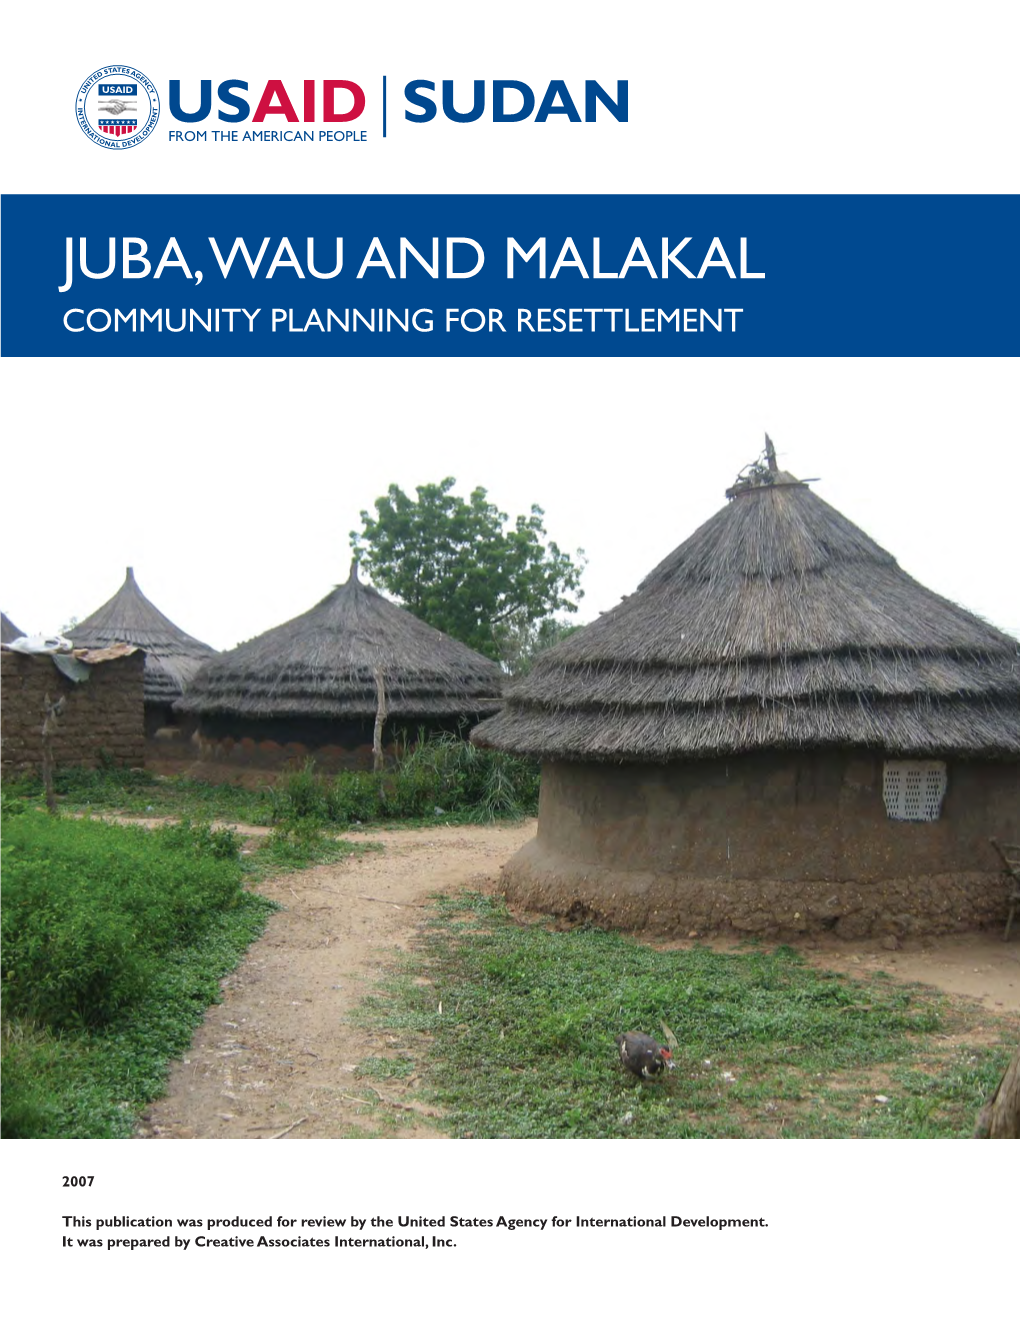 Juba, Wau and Malakal Community Planning for Resettlement